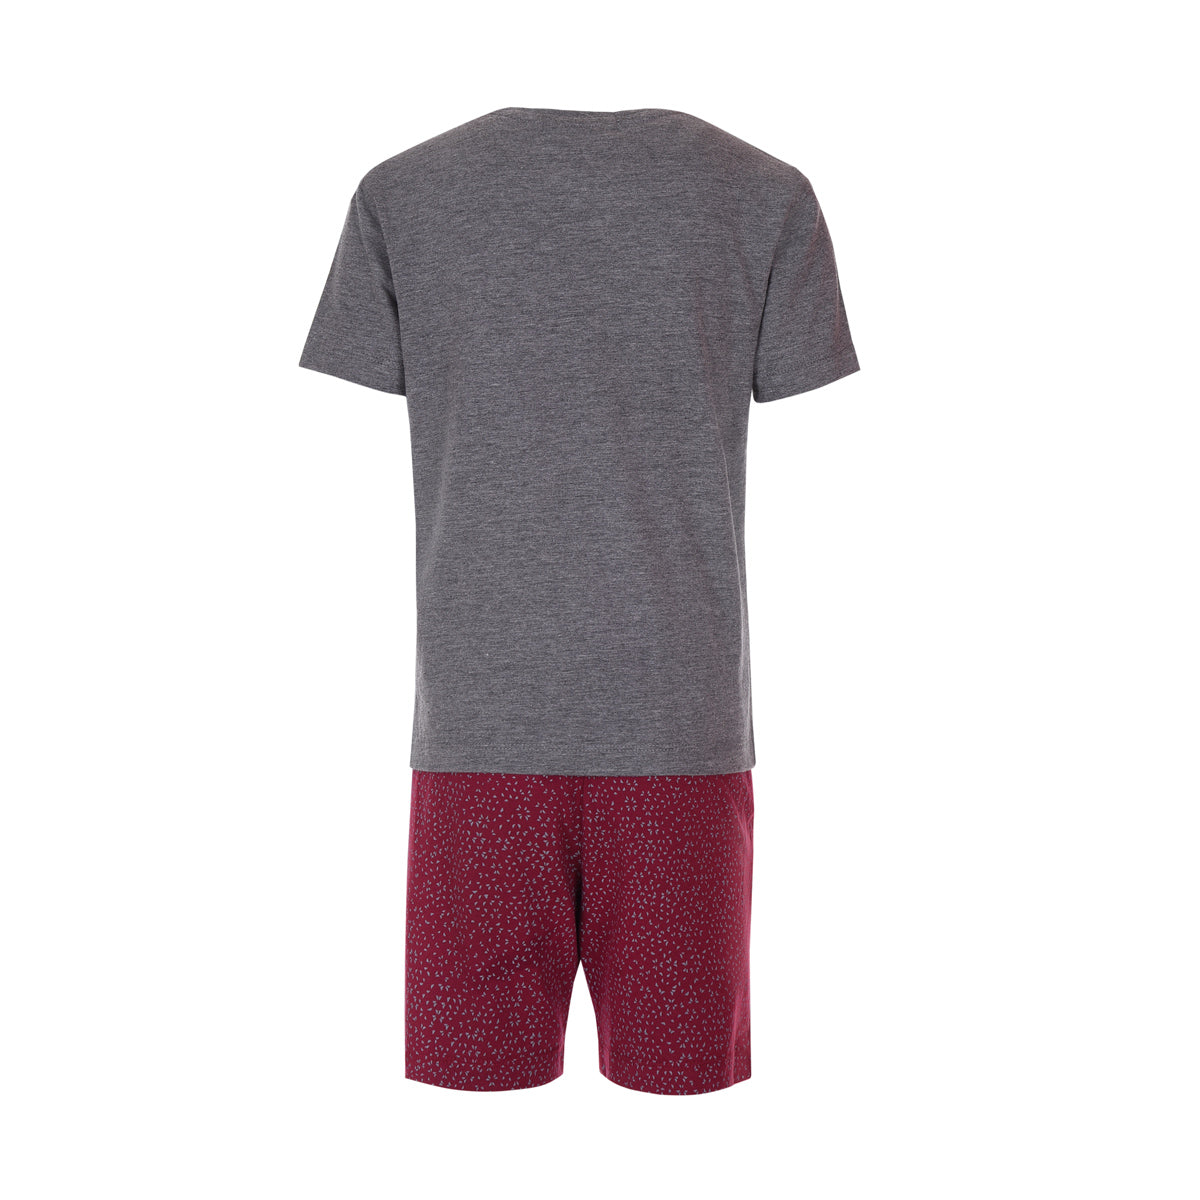 Boys Design Print  short & Solid Top with Pocket Pajamas(19)